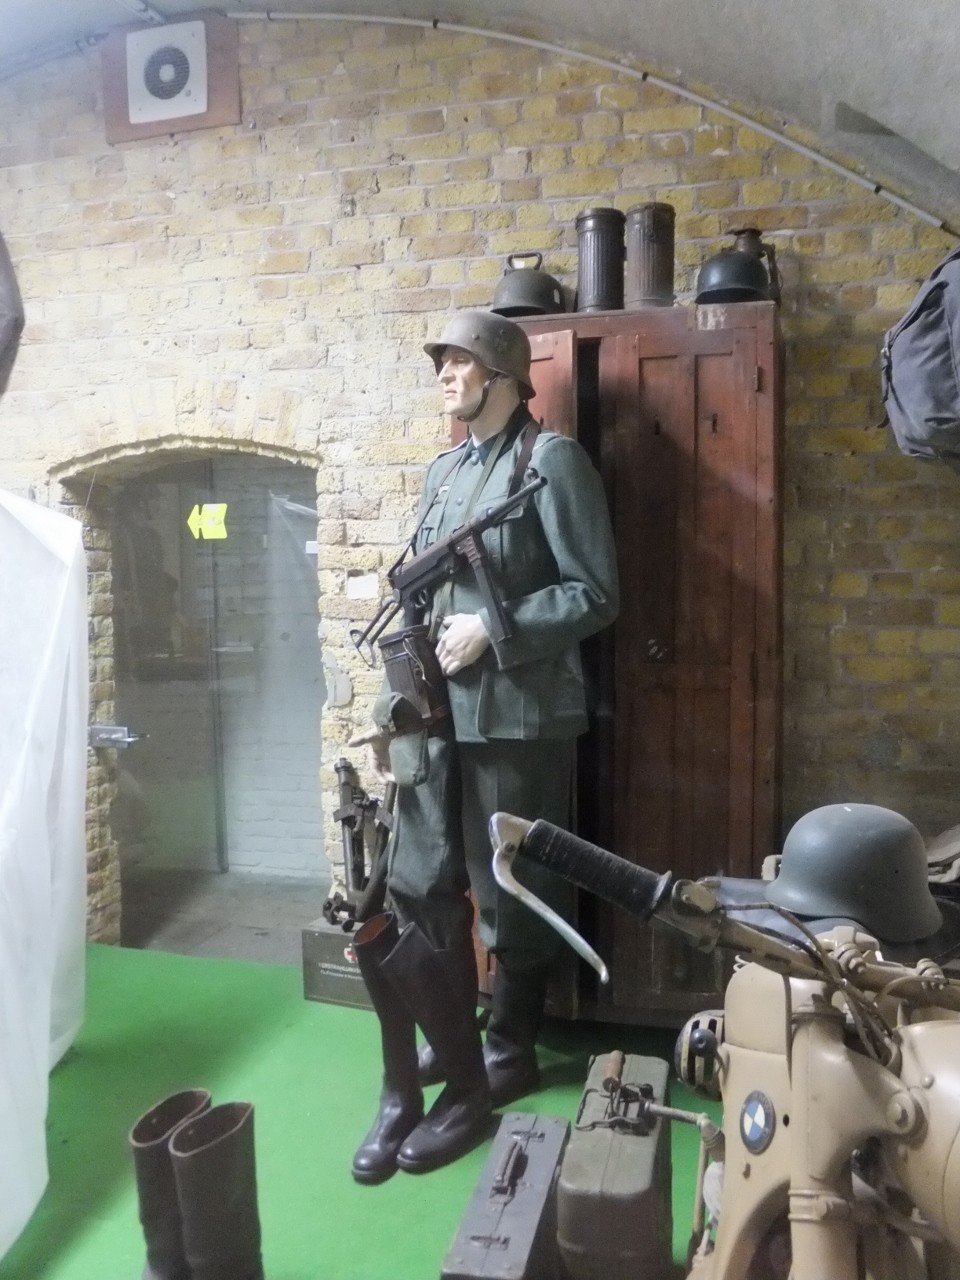 Musée Dunkerque 1940 Opération Dynamo